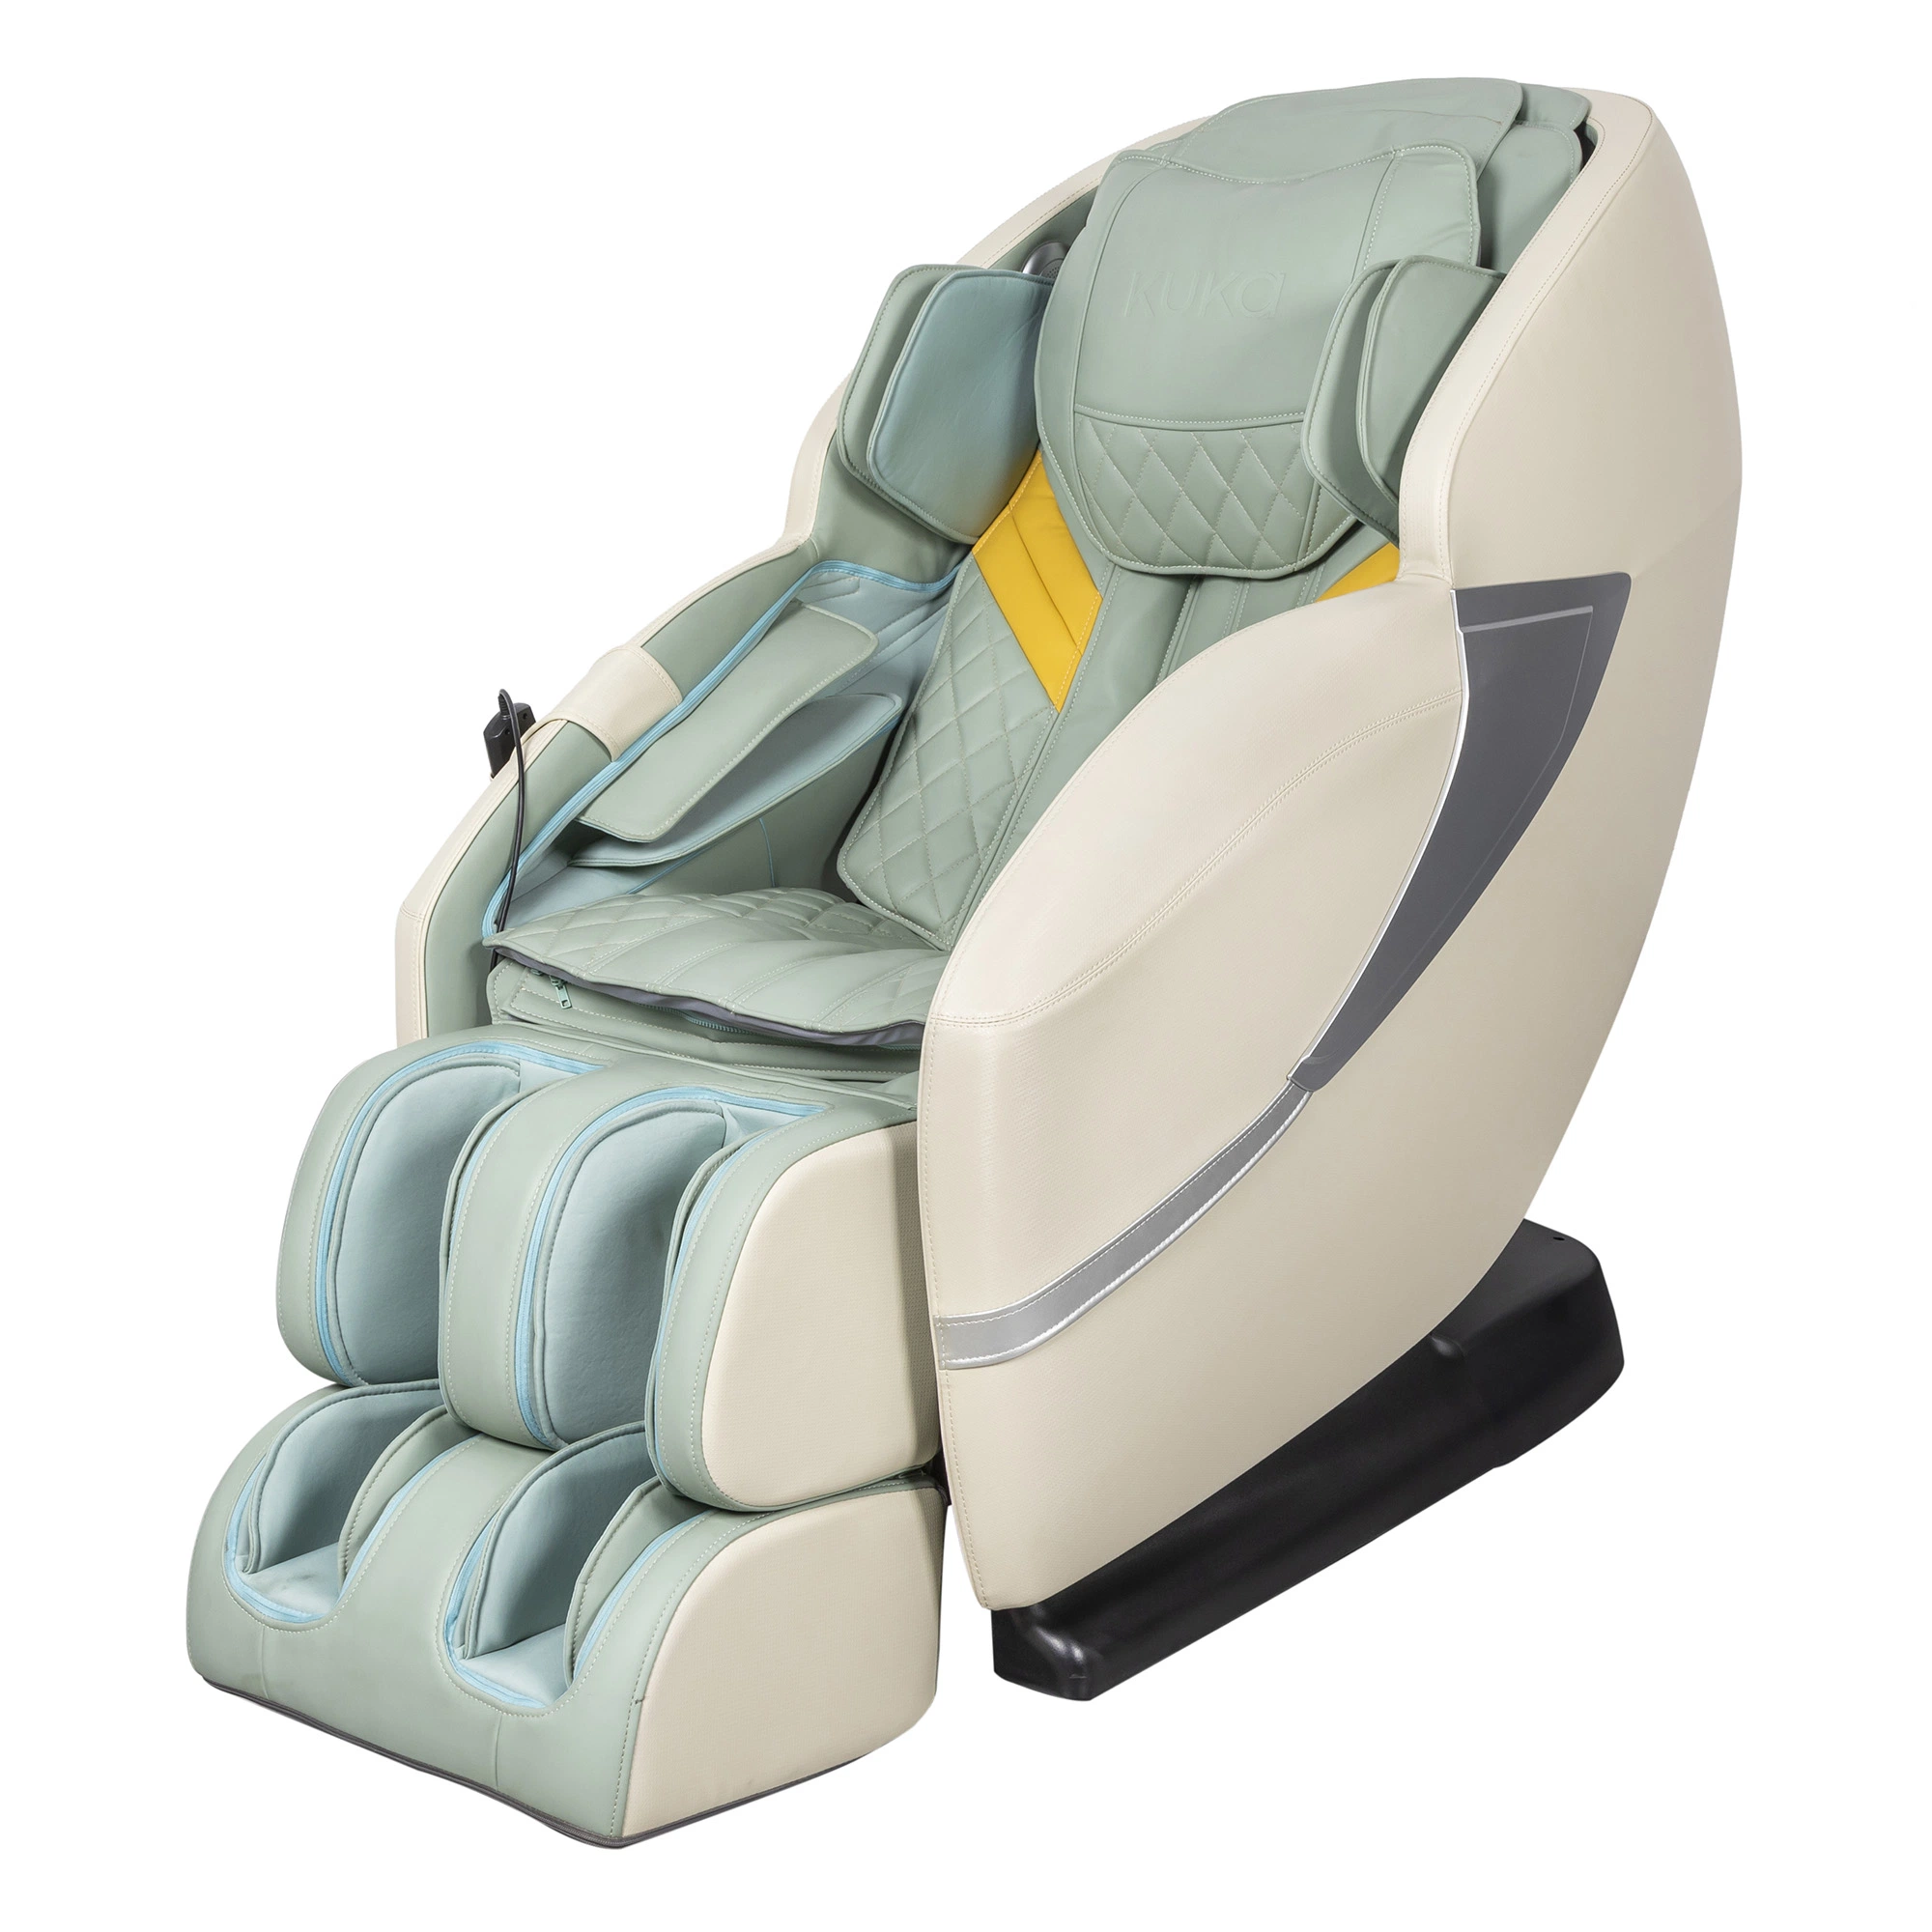 SL Track Full Body Relax Zero Gravity Recliner Cheap Price Electric Massage Chair